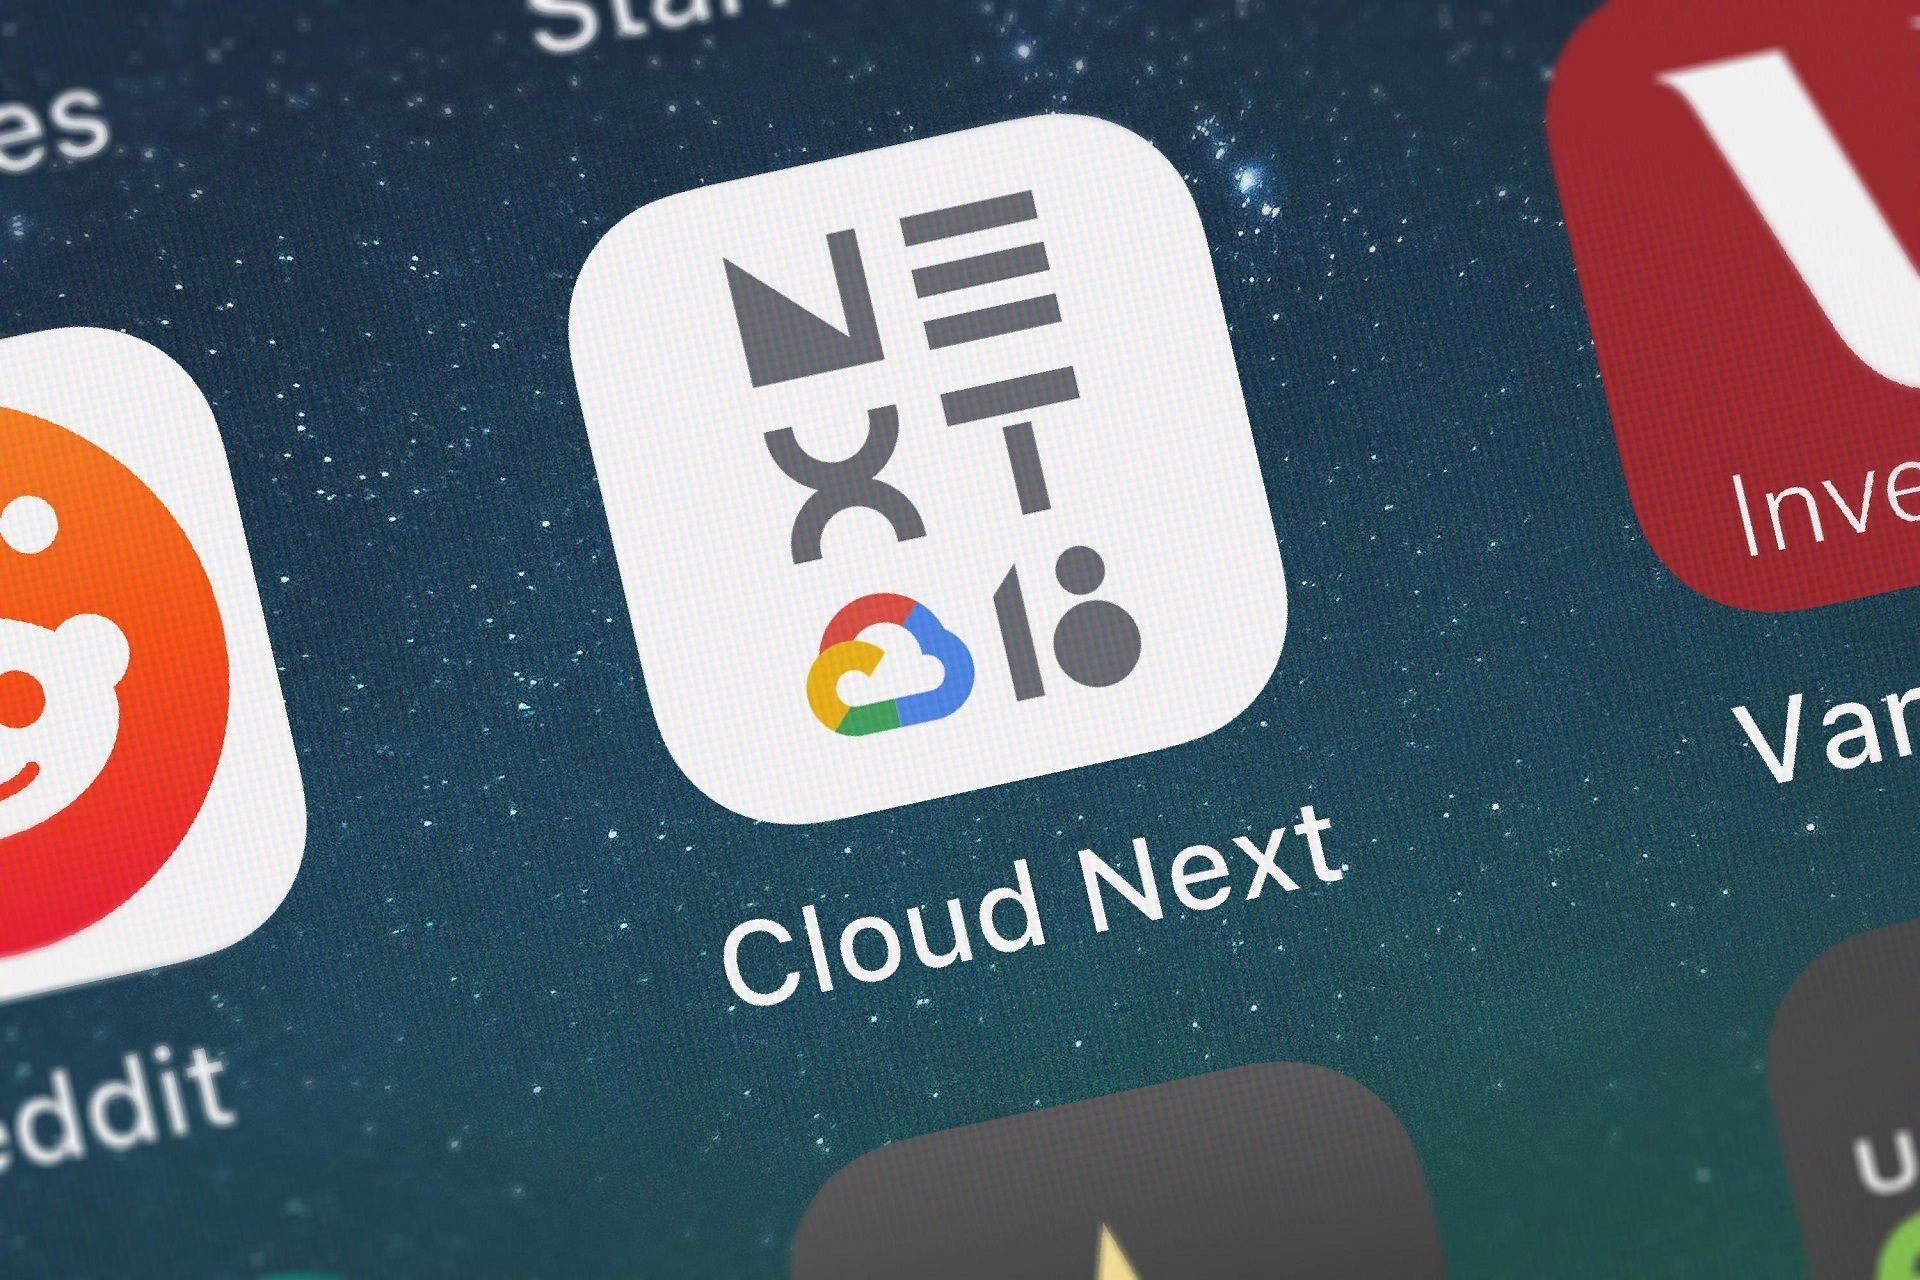 Google Cloud Next 2023